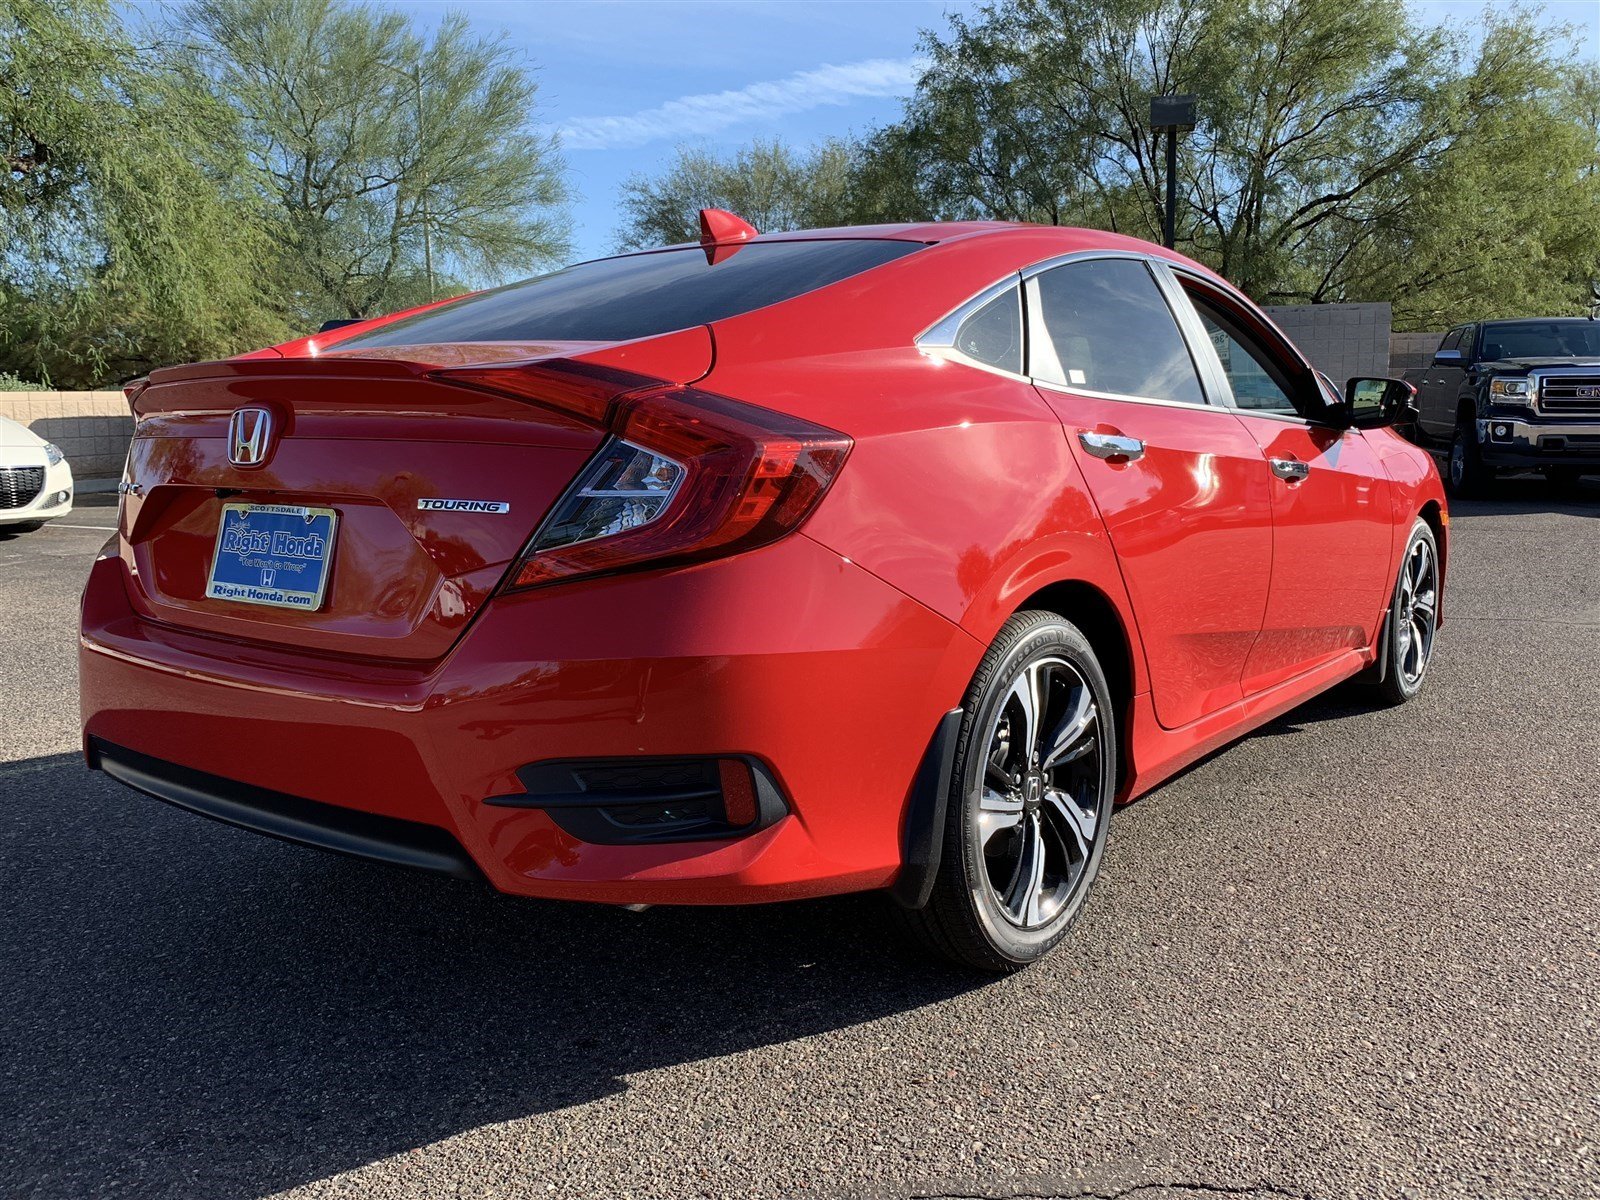 New 2018 Honda Civic Touring 4dr Car in Scottsdale #00182805 | Right Honda